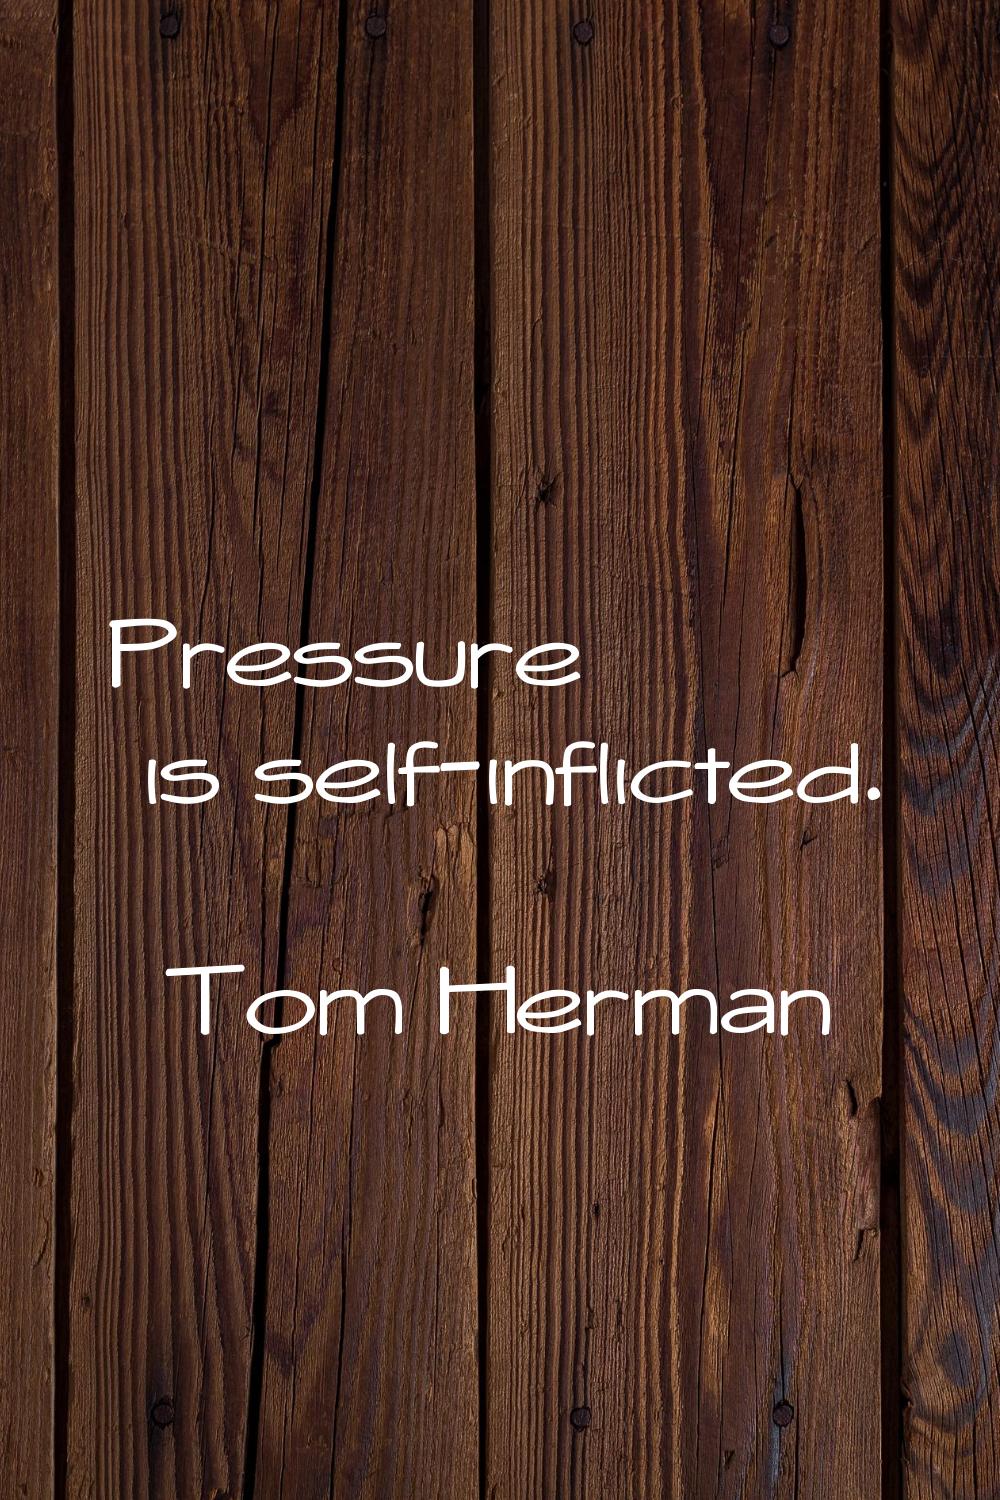 Pressure is self-inflicted.